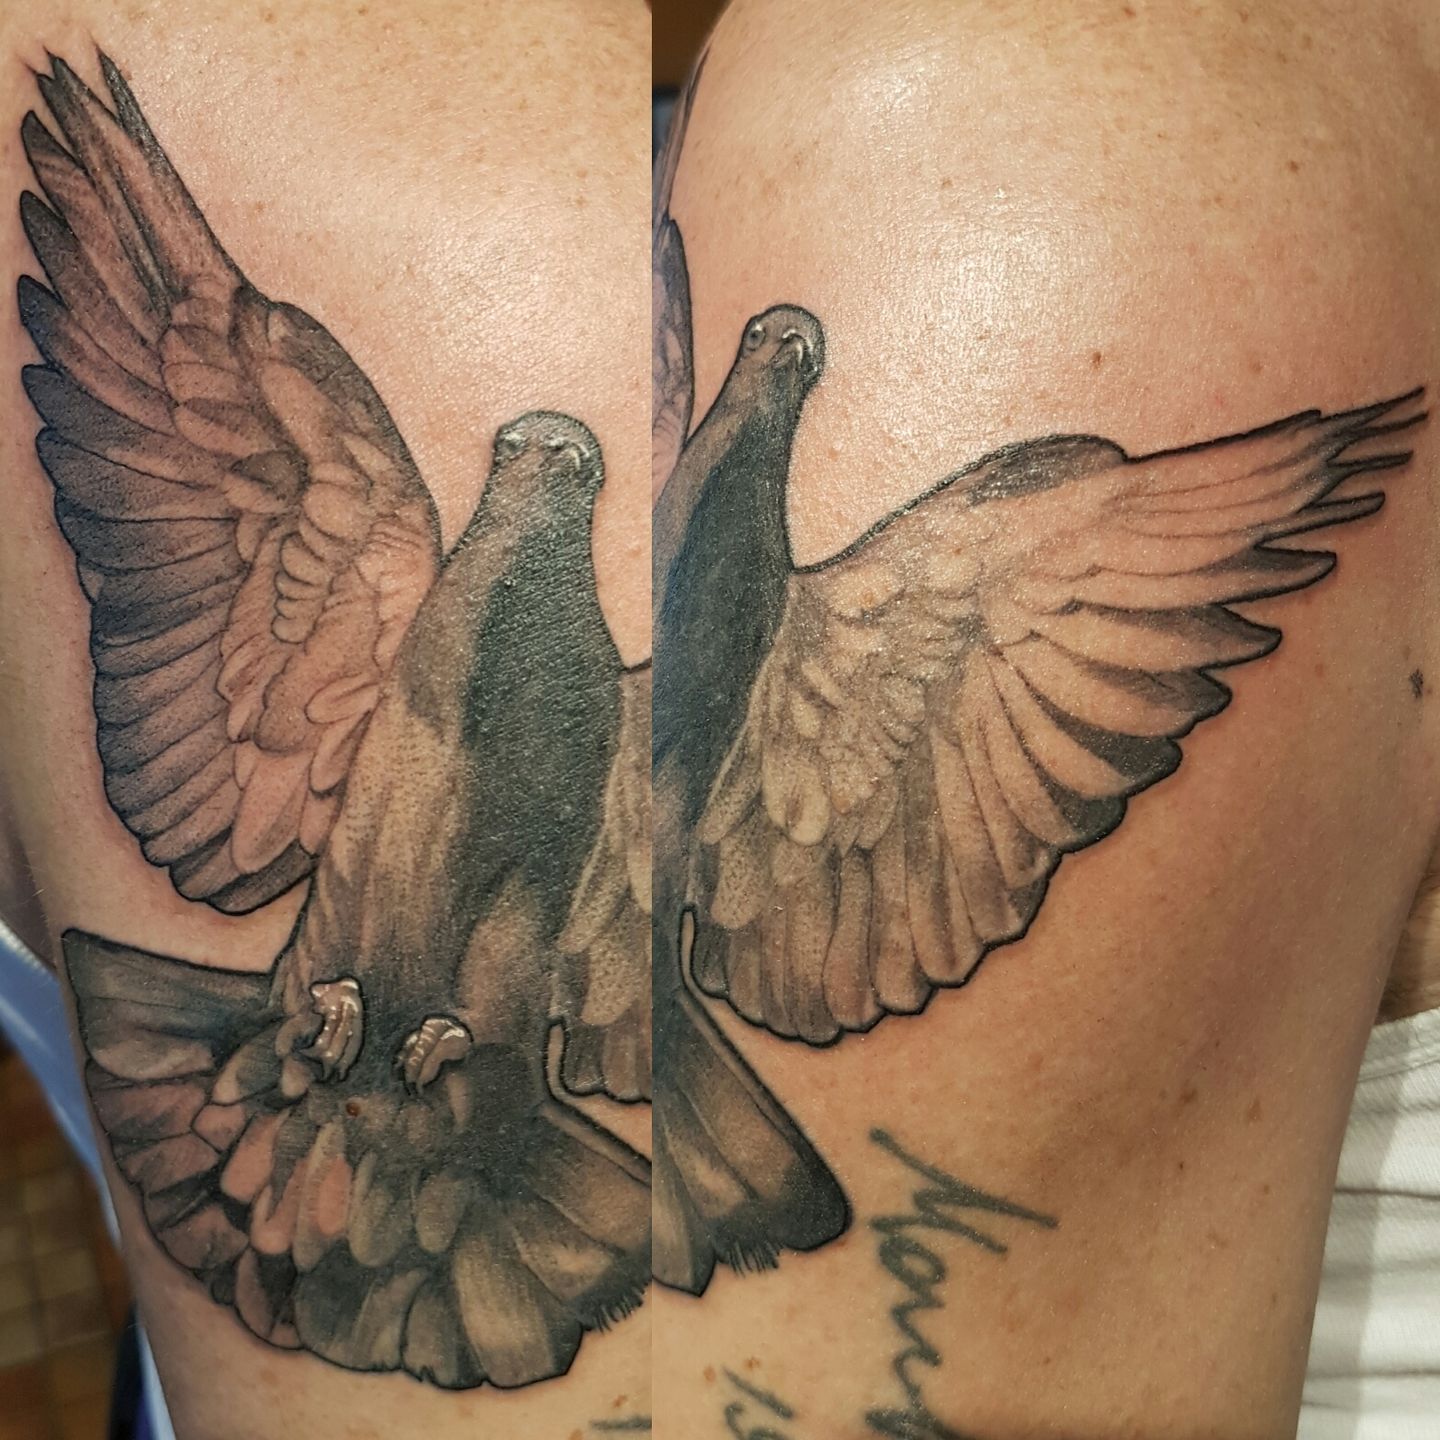 Dove tattoo designs are a symbol of hope, peace and calm | Ratta Tattoo